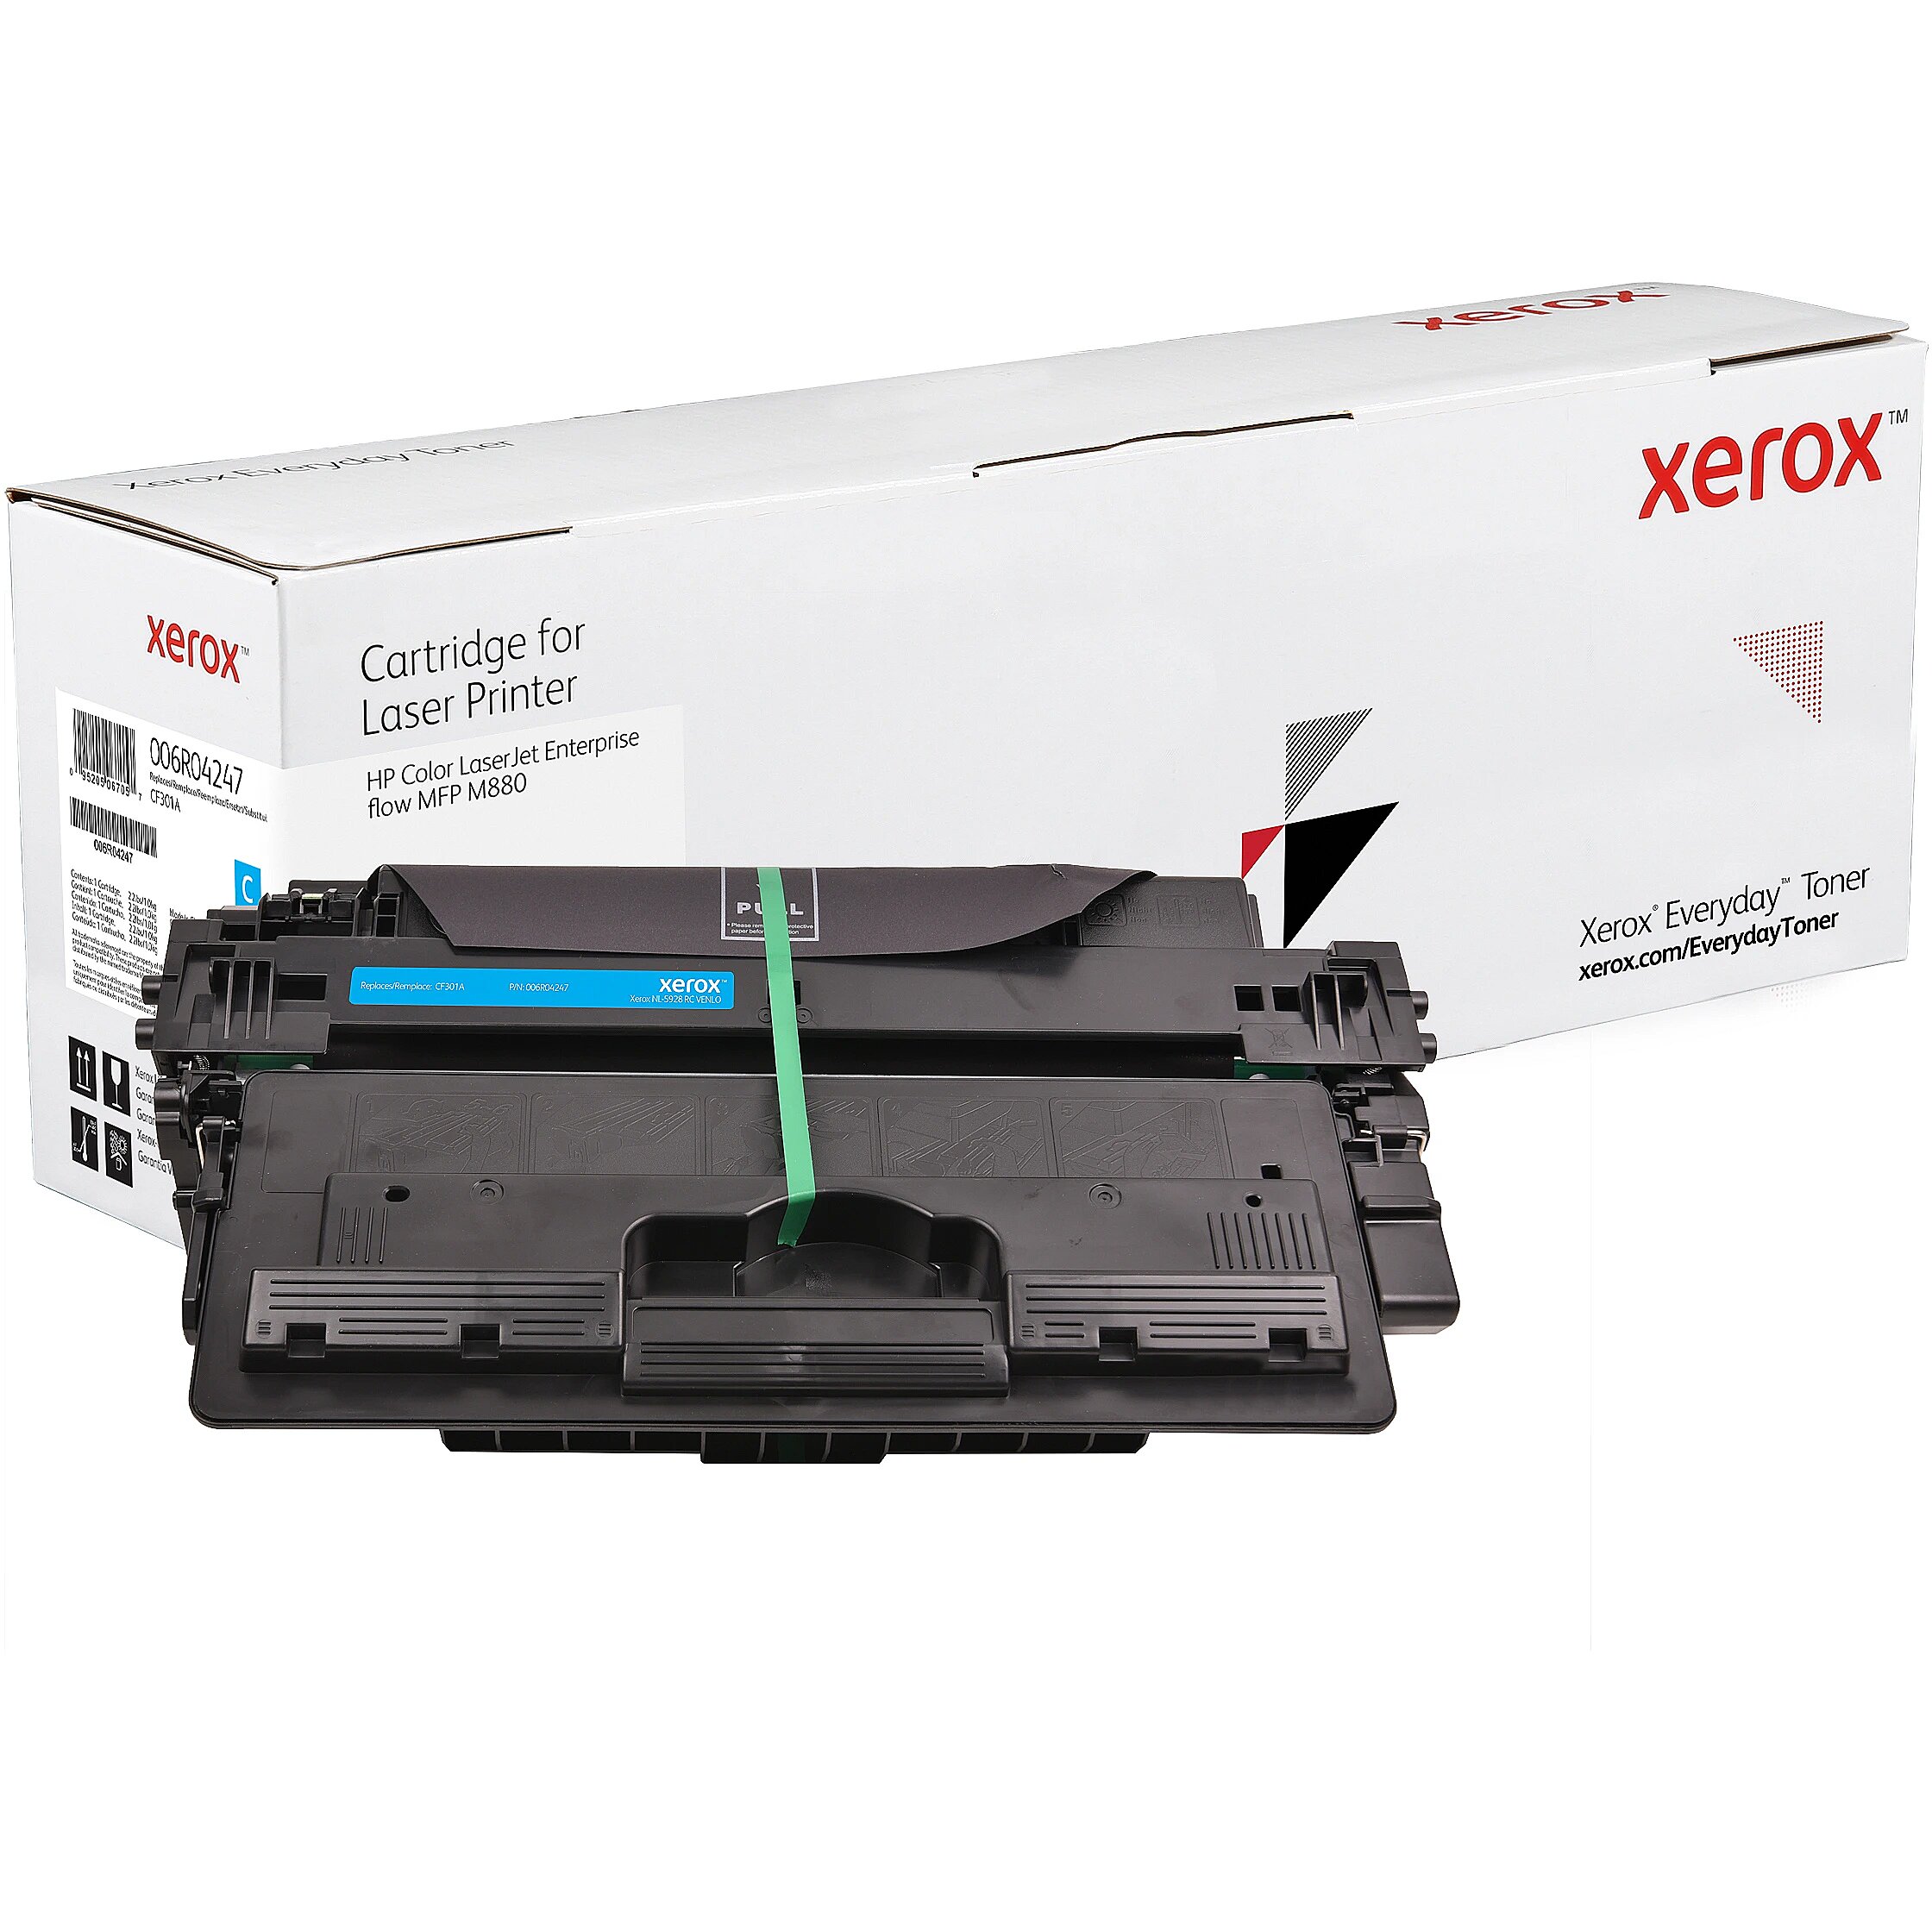 Xerox nl-5928 RC Venlo картридж. Xerox nl-5928. Xerox nl-5928 принтер. Xerox nl-5928 картридж.